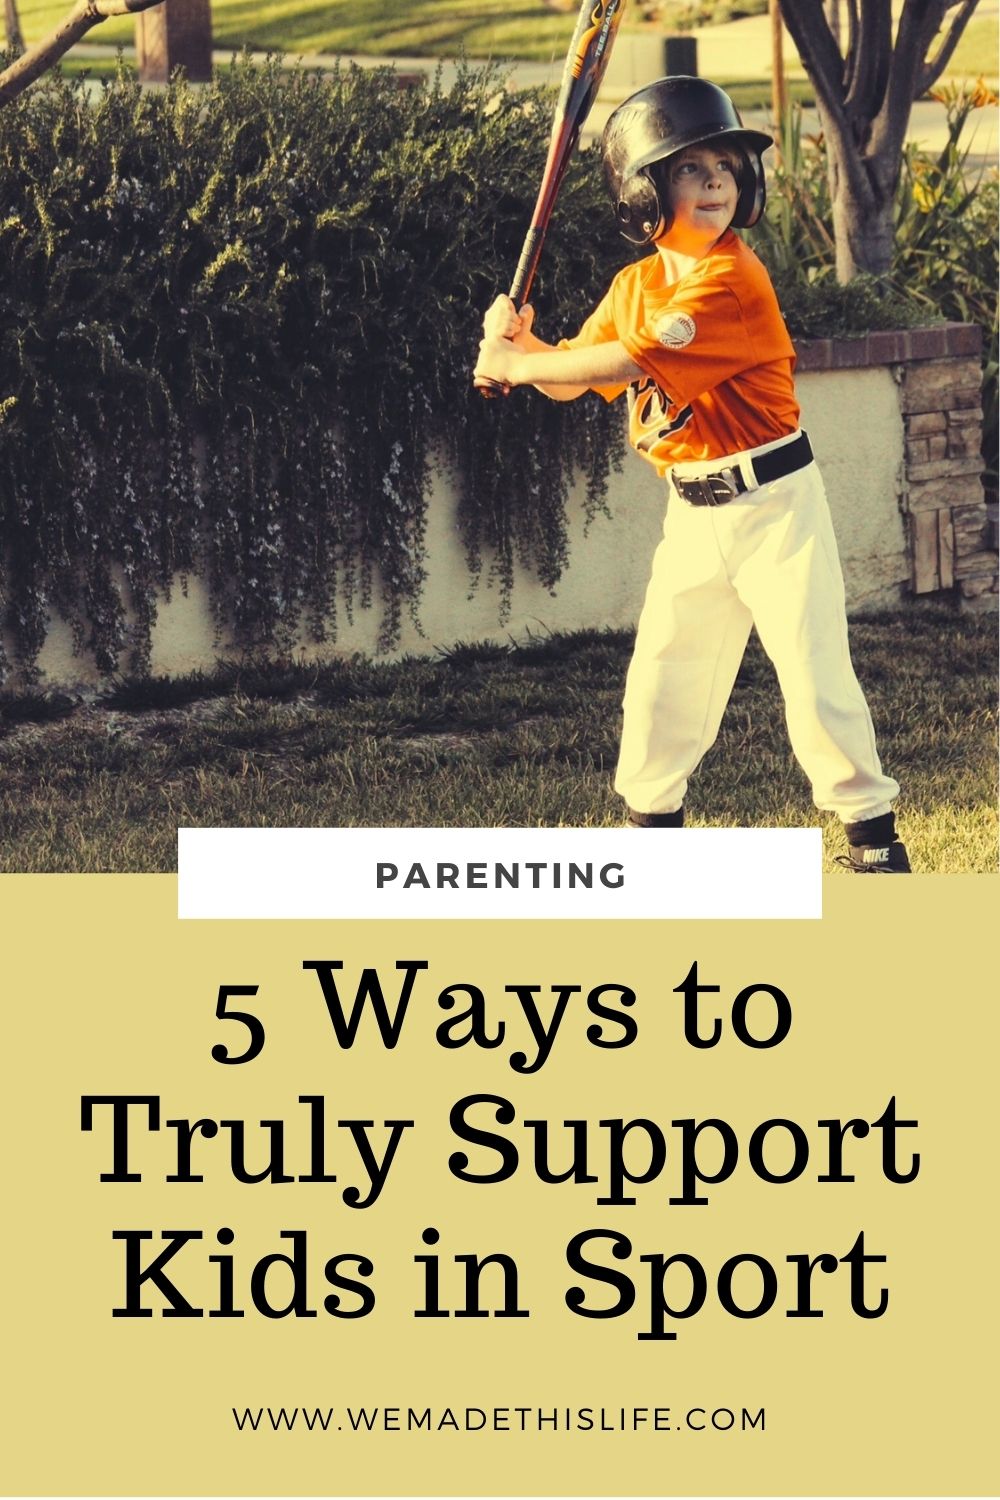 5 ways to support kids in sport